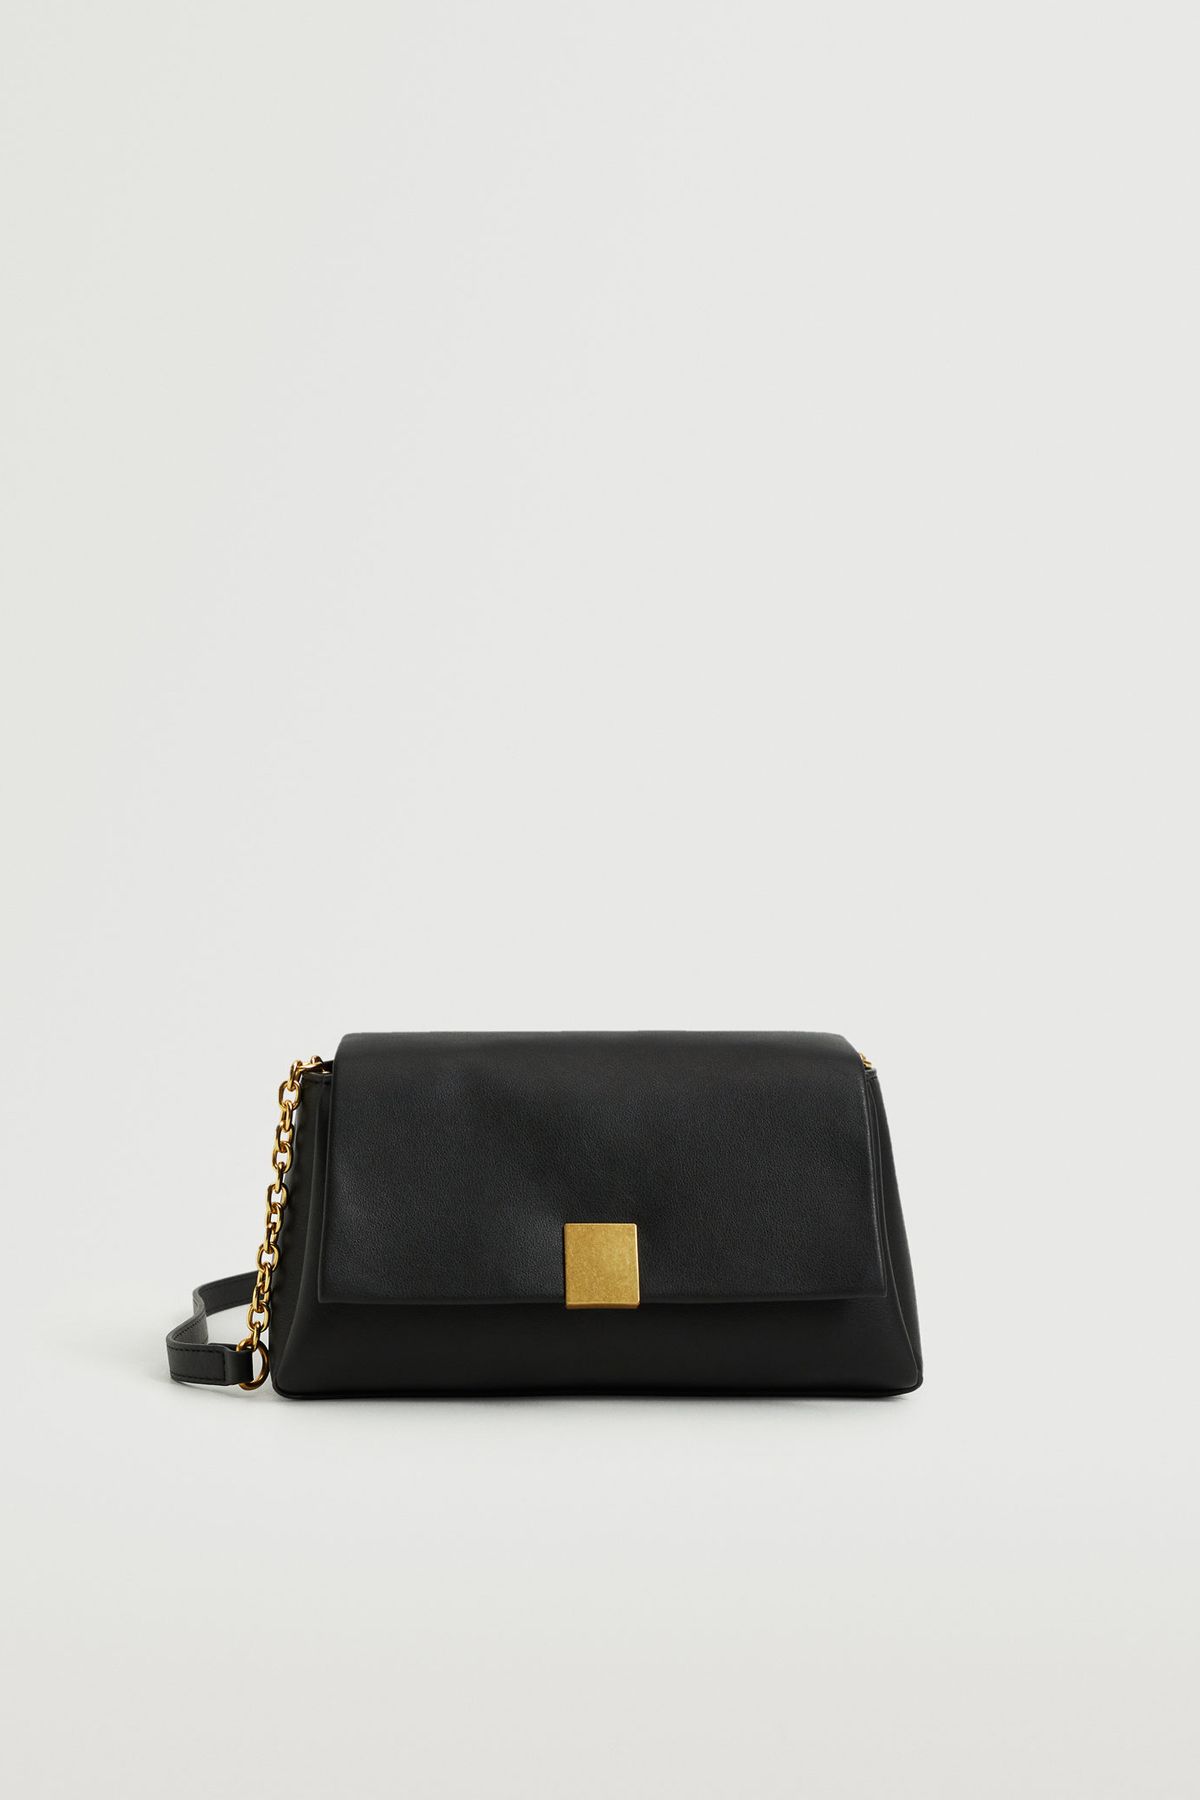 Mango Gardenia Braided Leather Bag in Black - Queen Letizia Handbags -  Queen Letizia Style